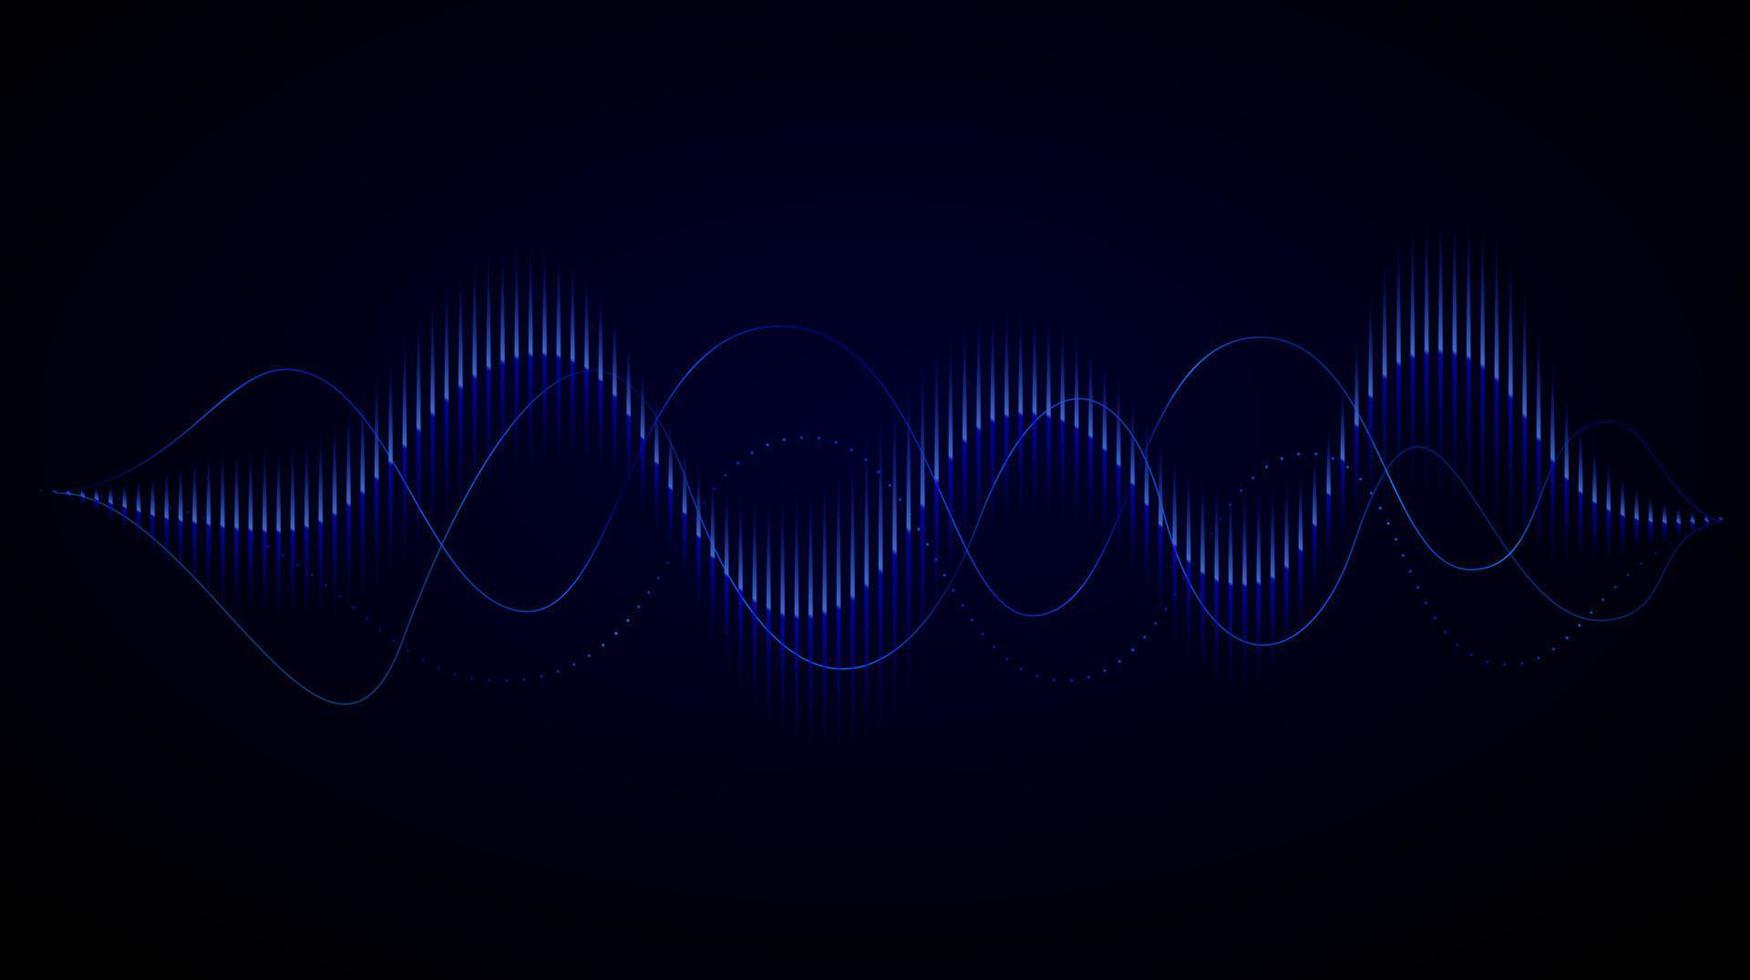 abstrakta ljudvågor. dynamisk vibrationsbakgrund. digital musikequalizer. vektor